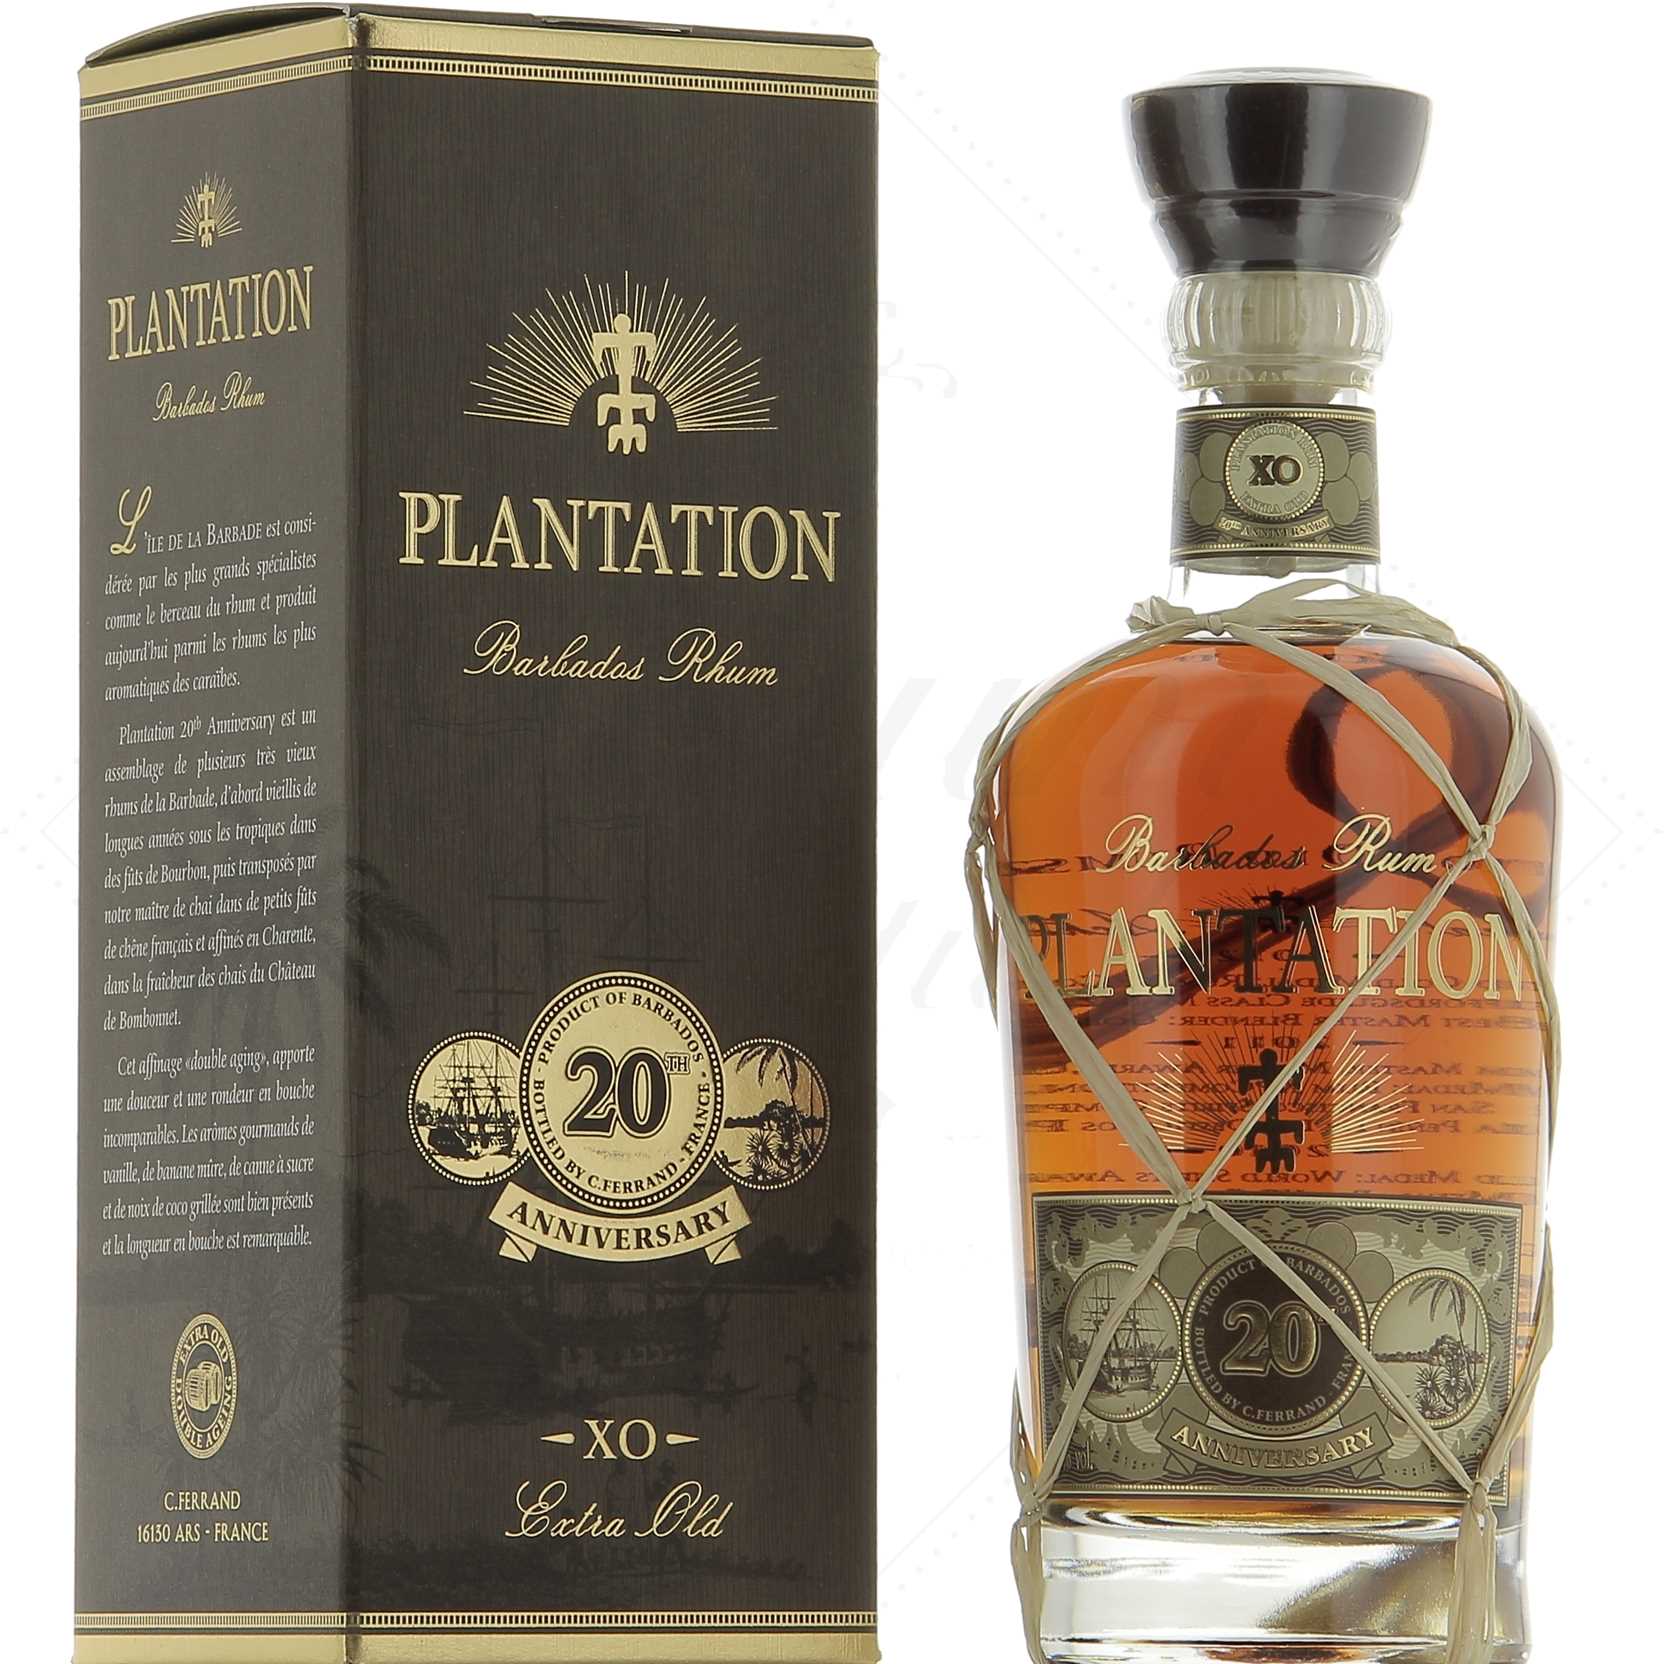 Plantation Rum Barbados XO 20th Anniversary 40° - old bottle